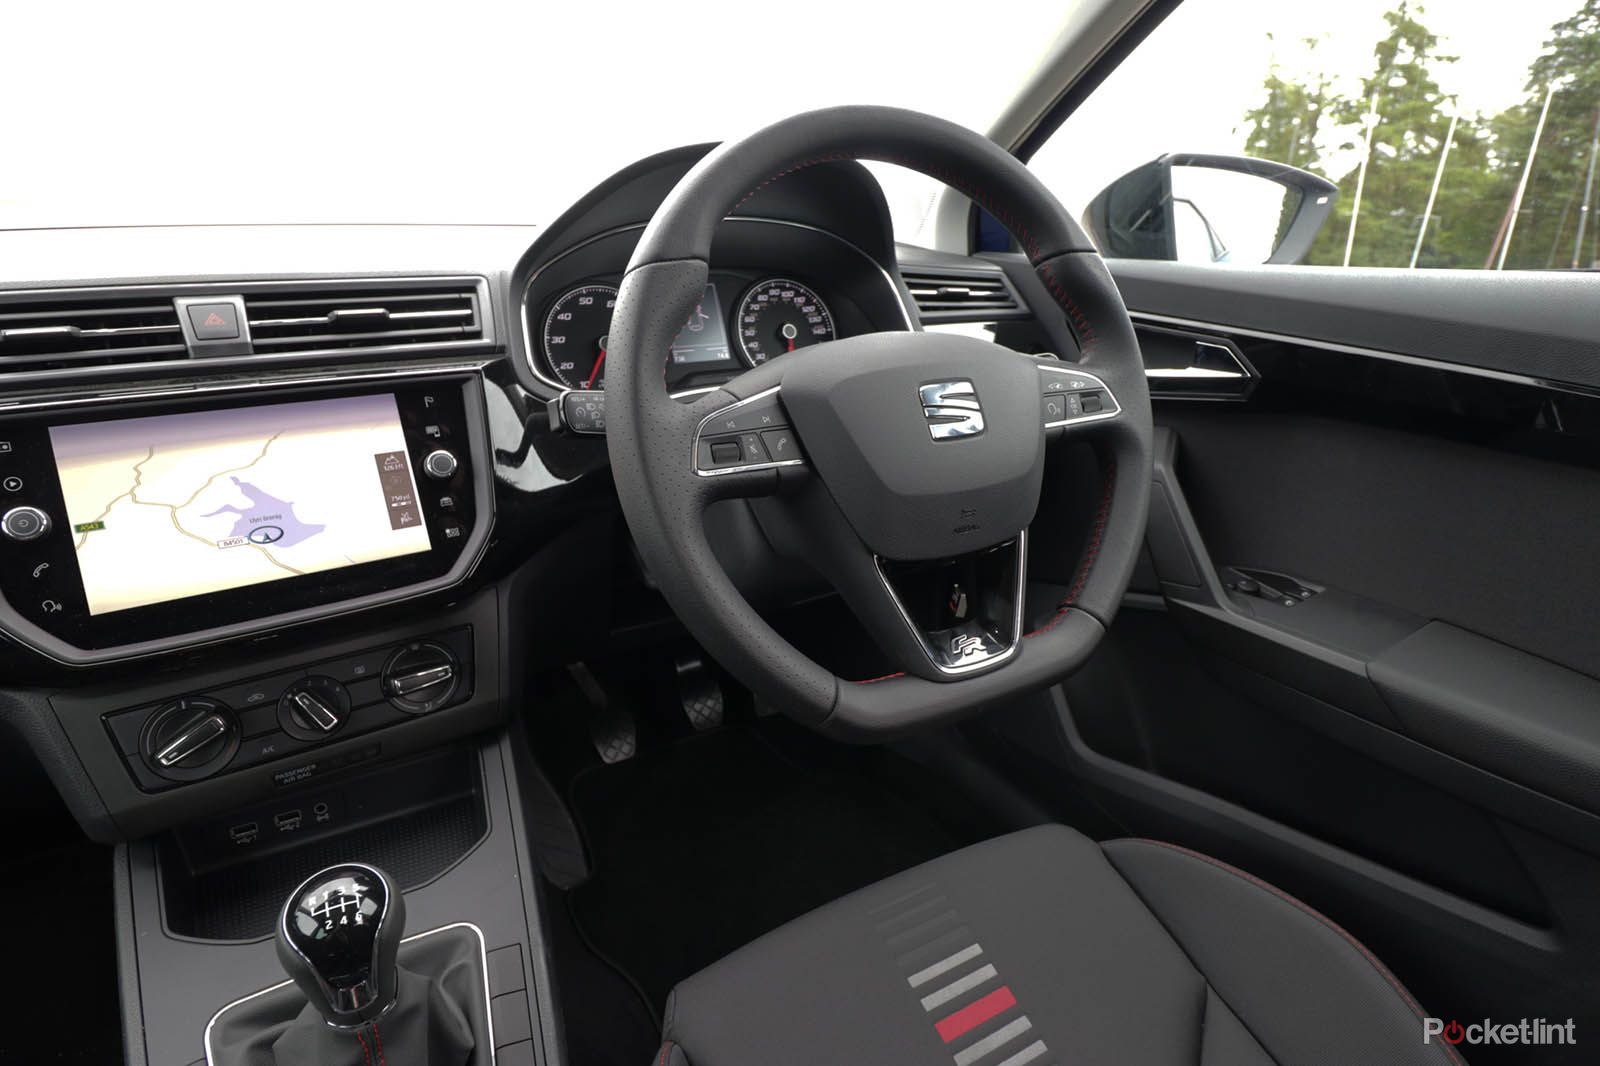 Seat Ibiza interior image 2